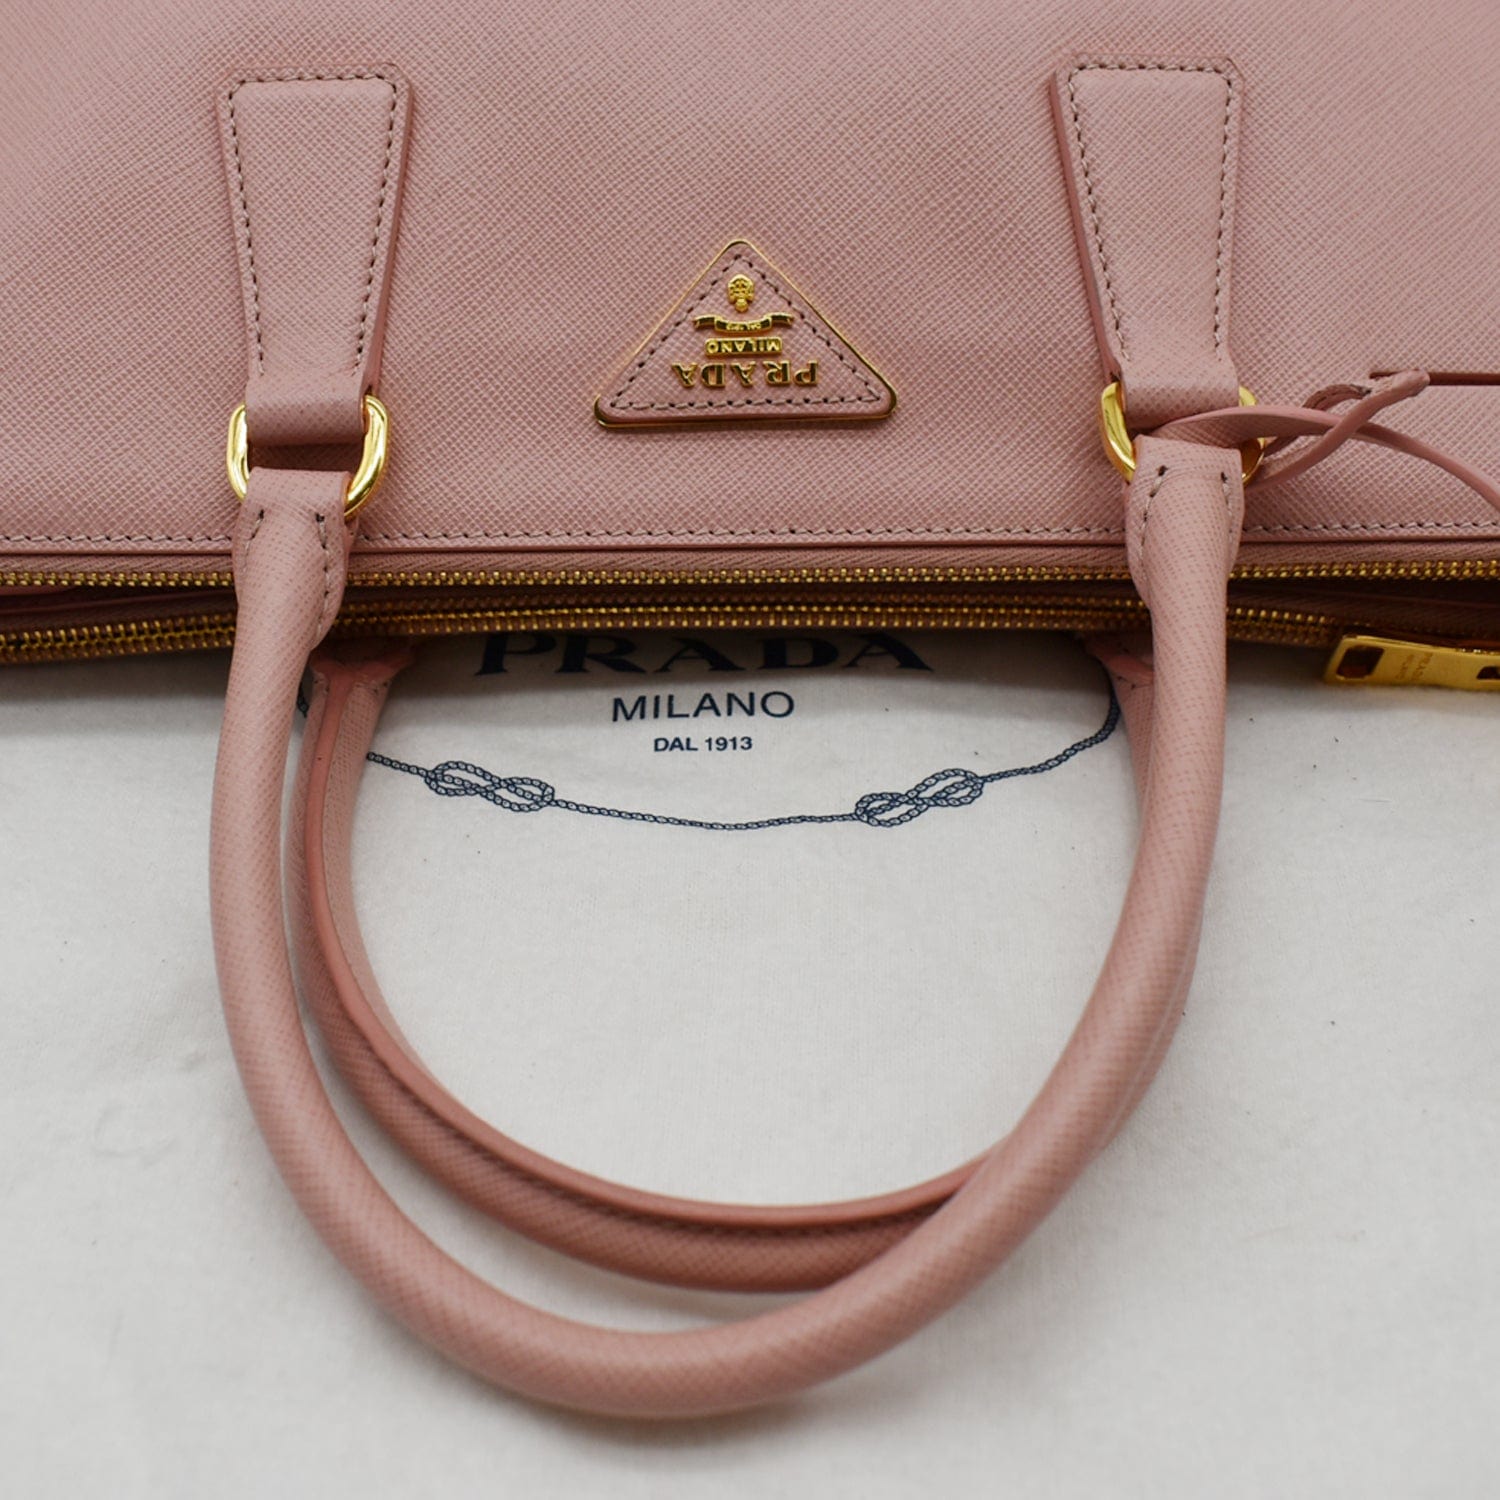 Petal Pink Saffiano Leather Mini Bag